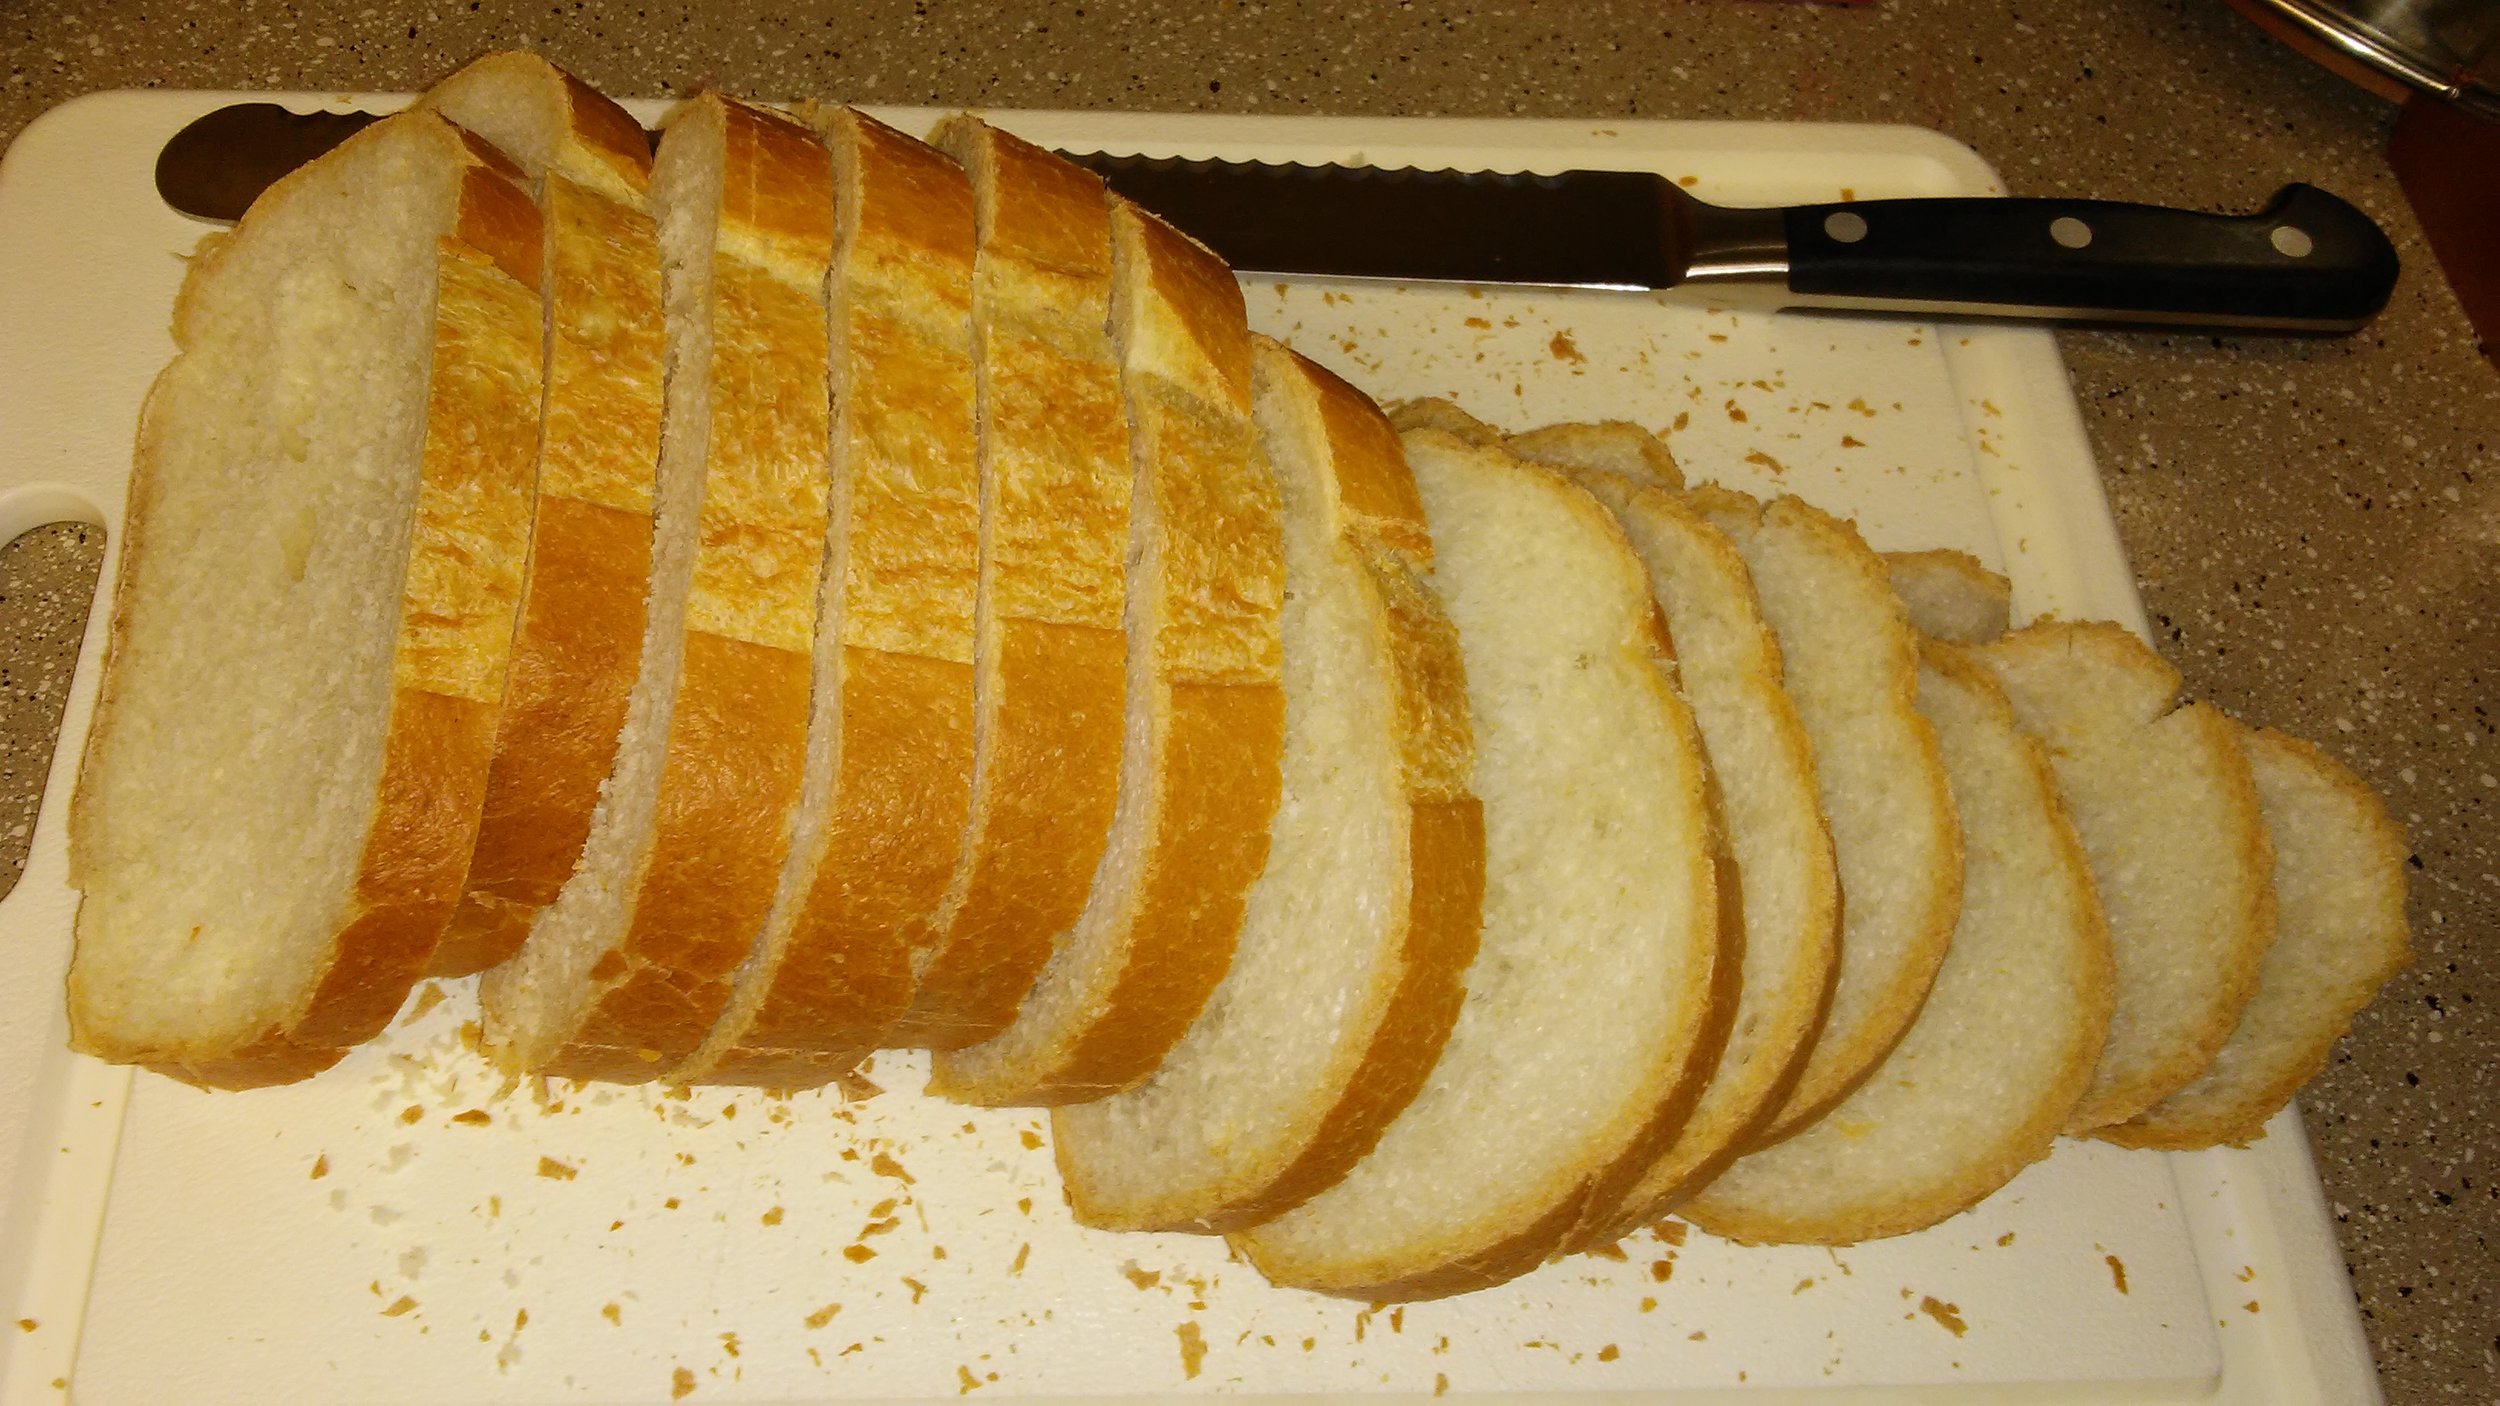 Slicing bread isn't that hard...